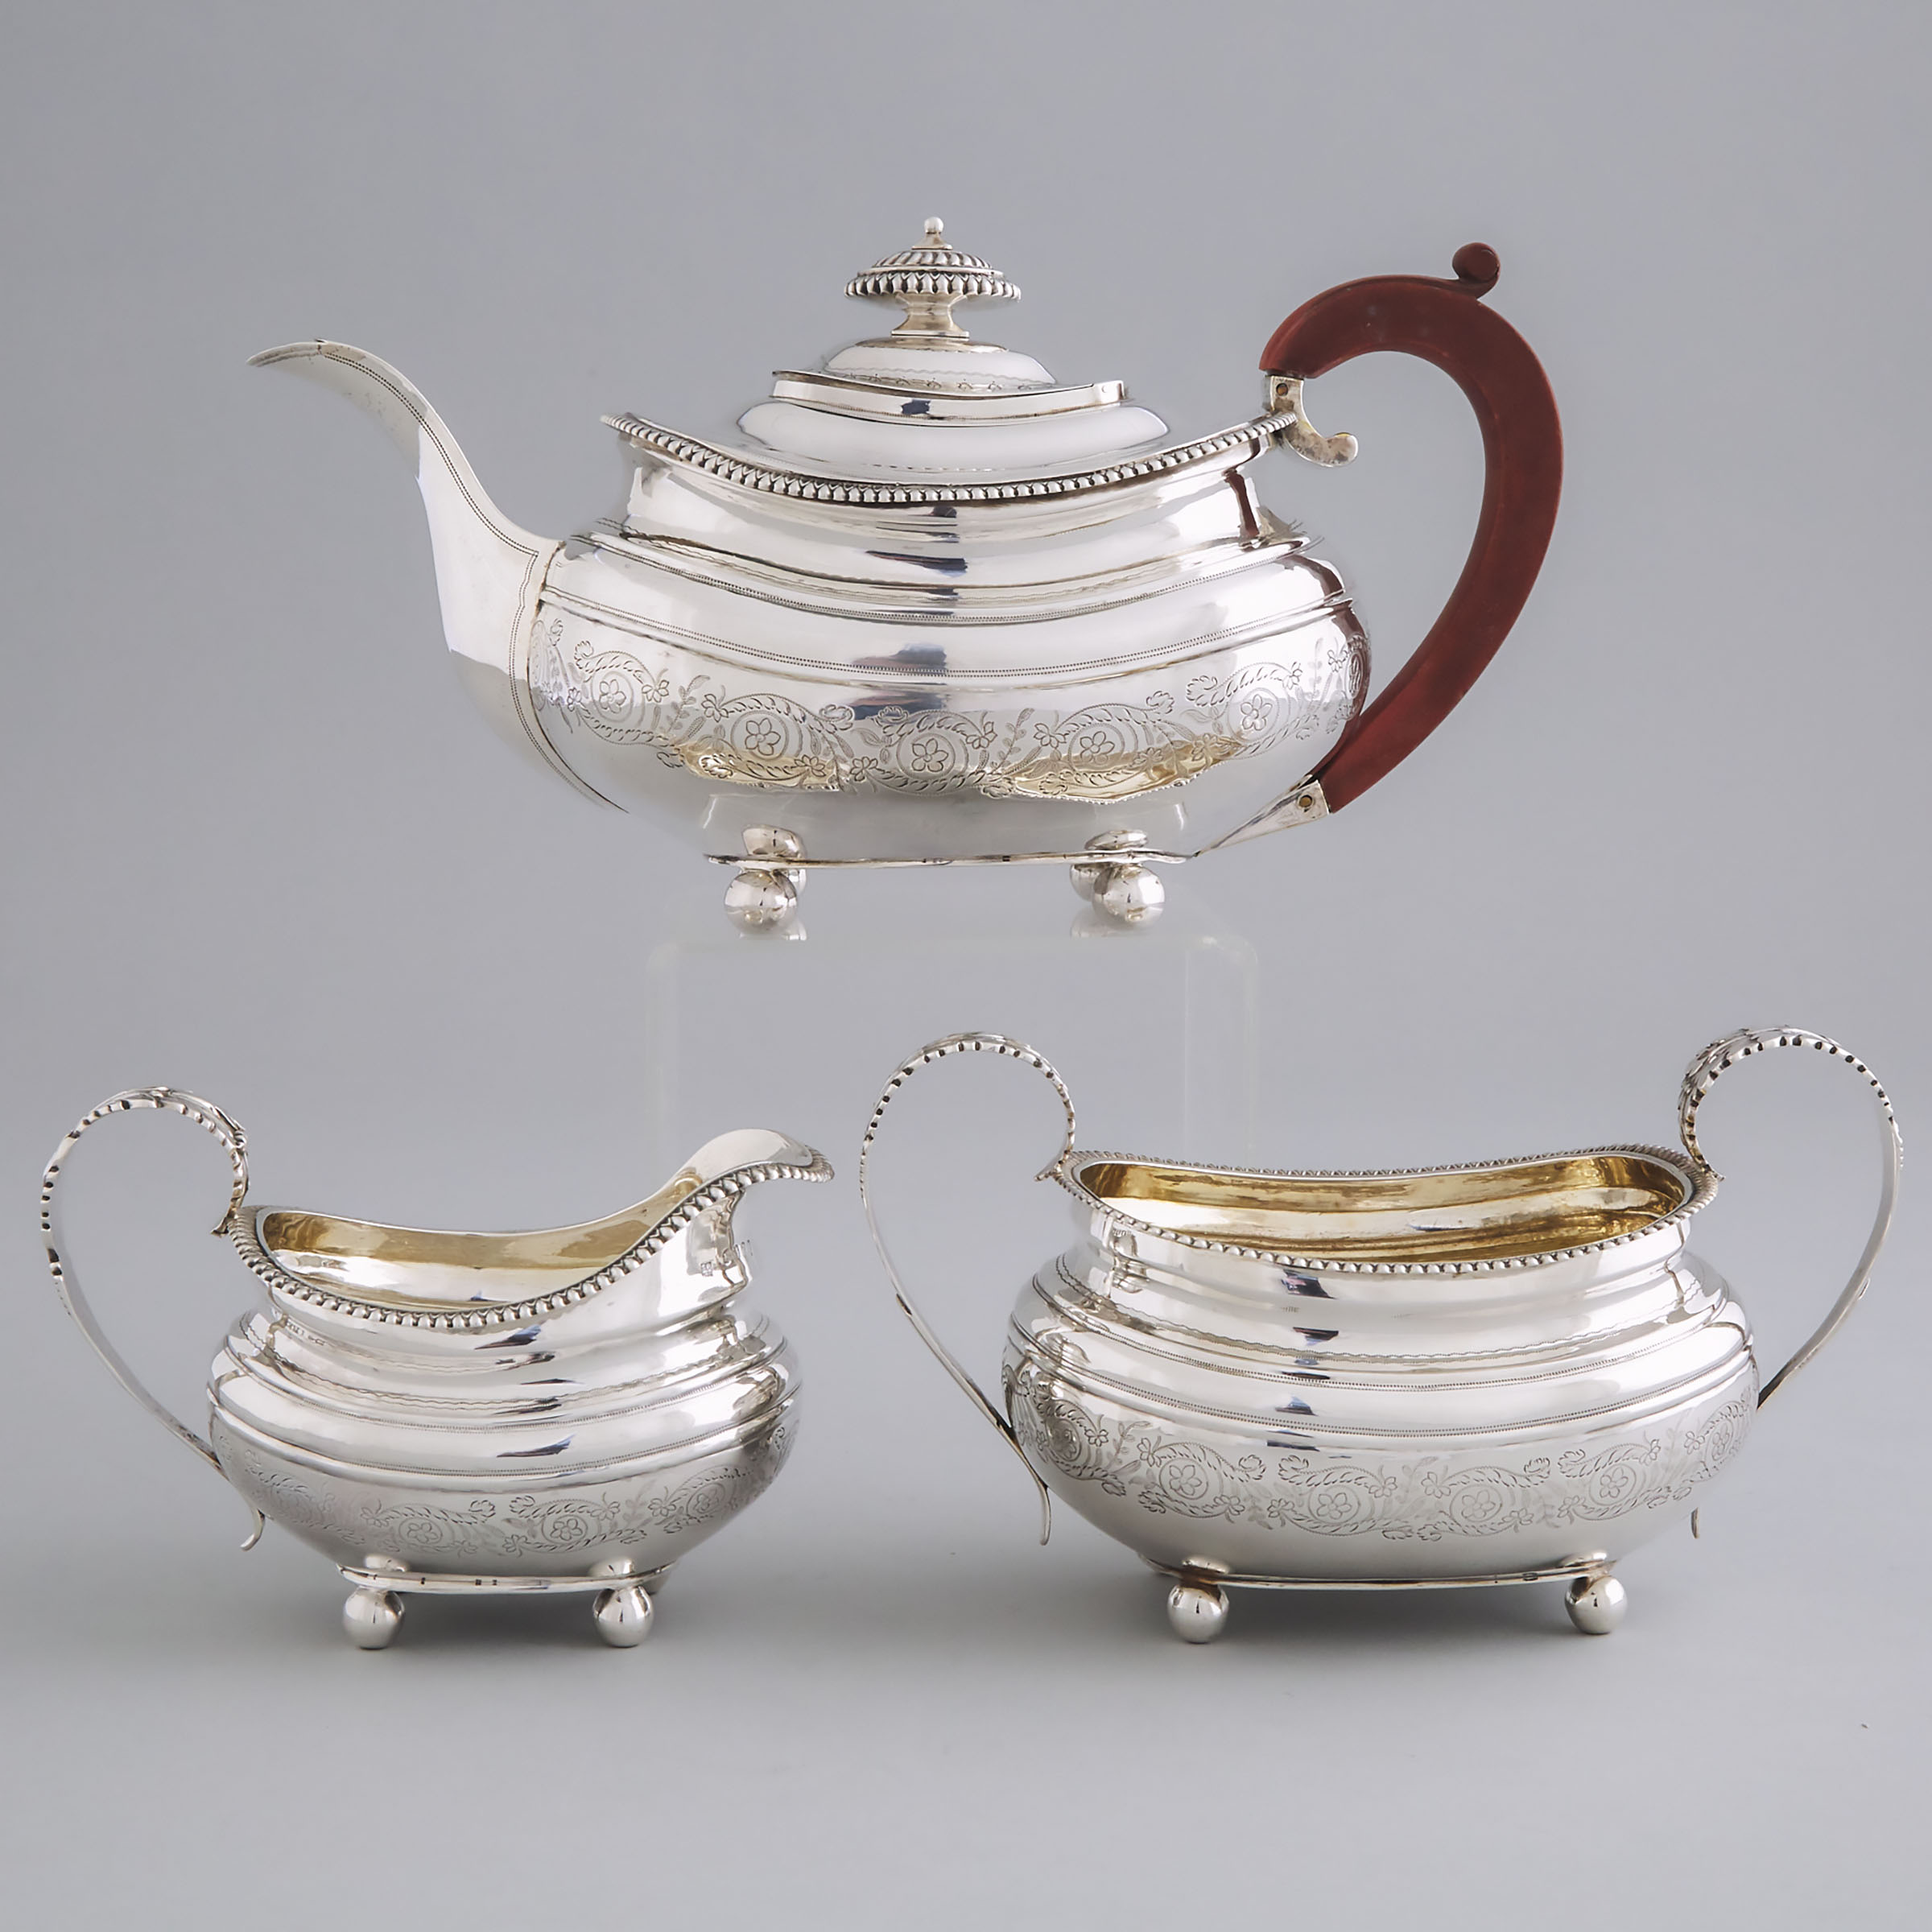 George III Silver Tea Service, Solomon Royes & John East Dix, London, 1818/19